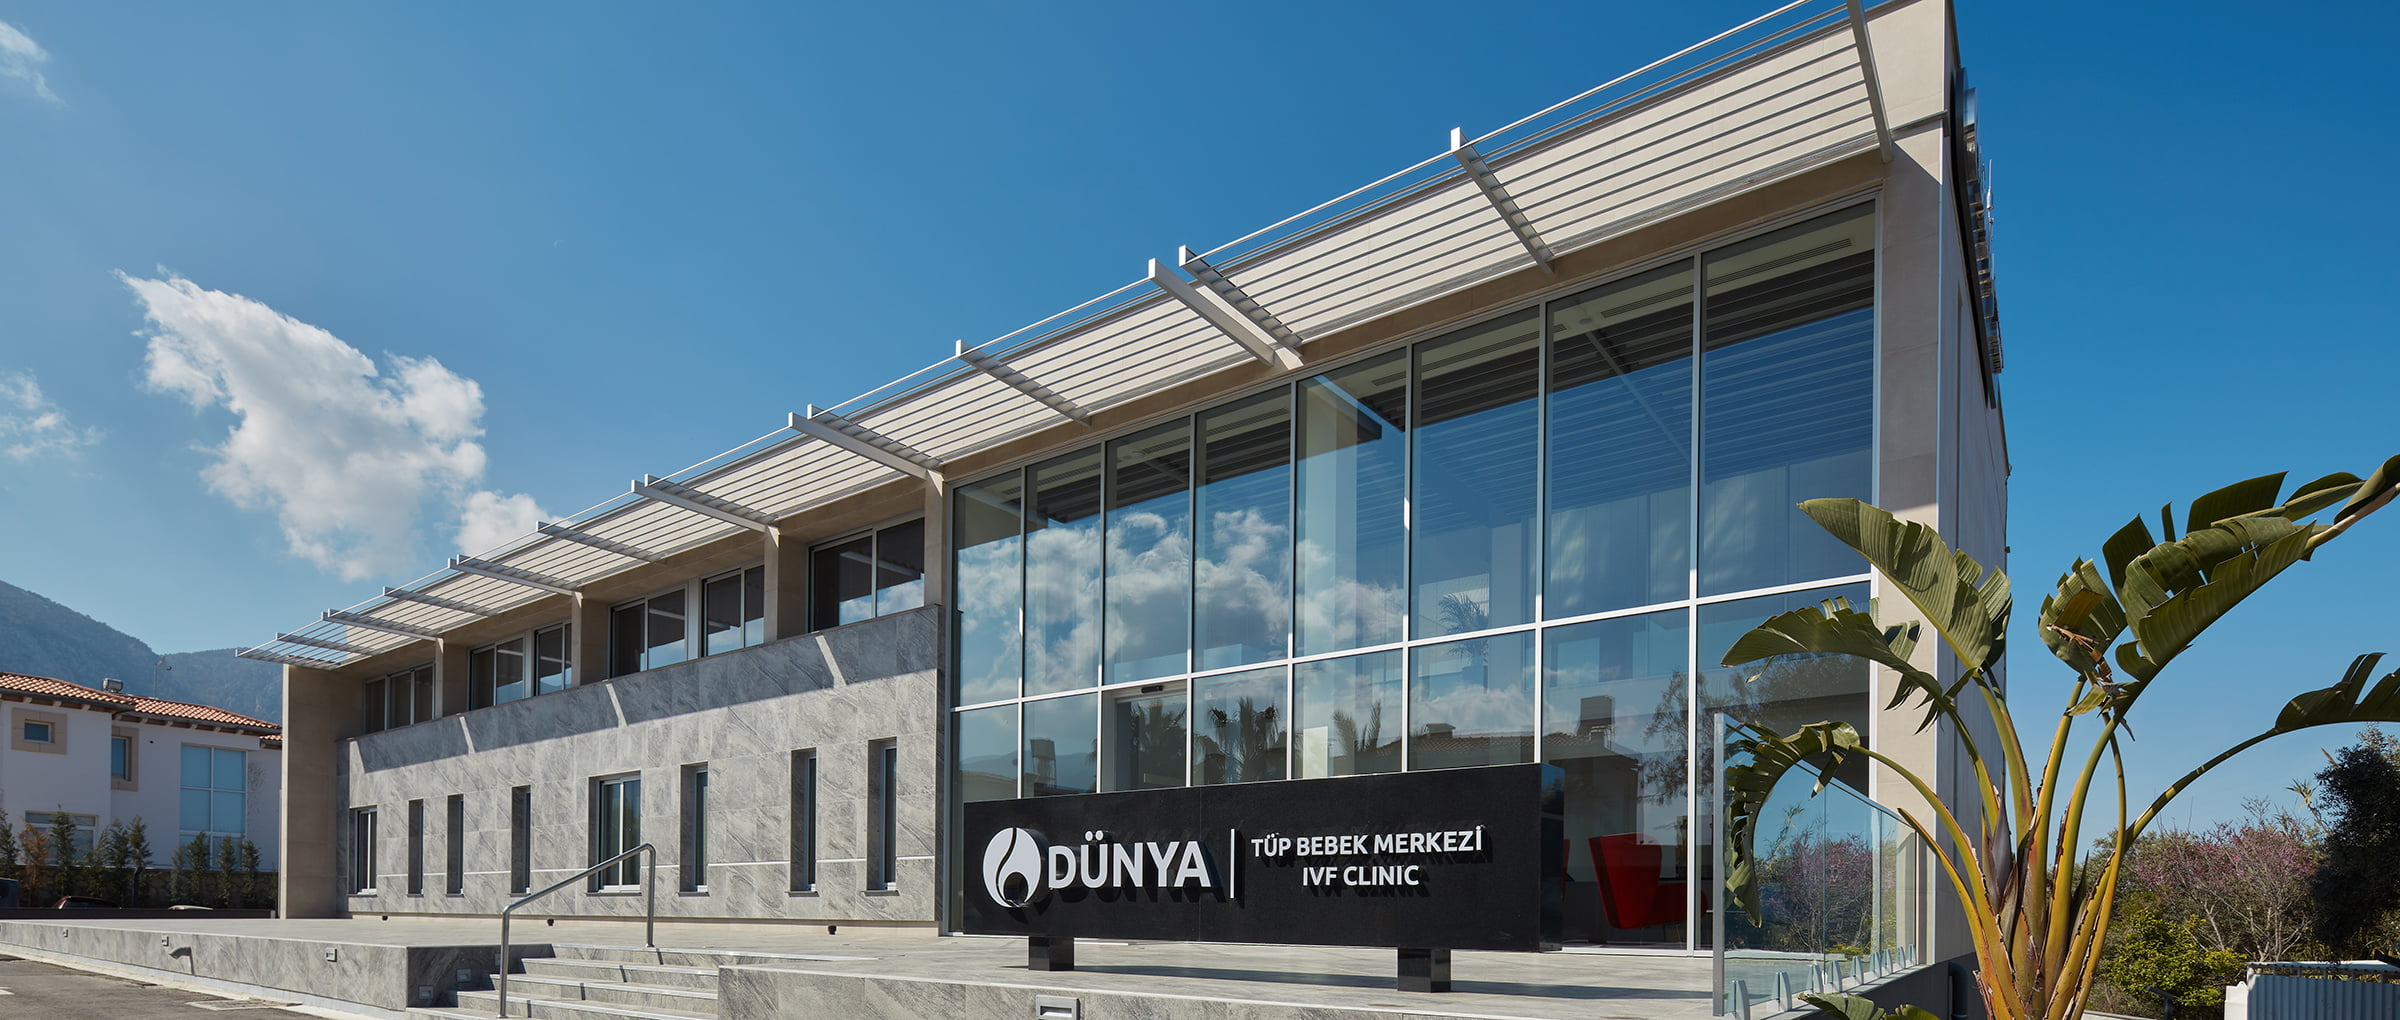 Dunya IVF building 1